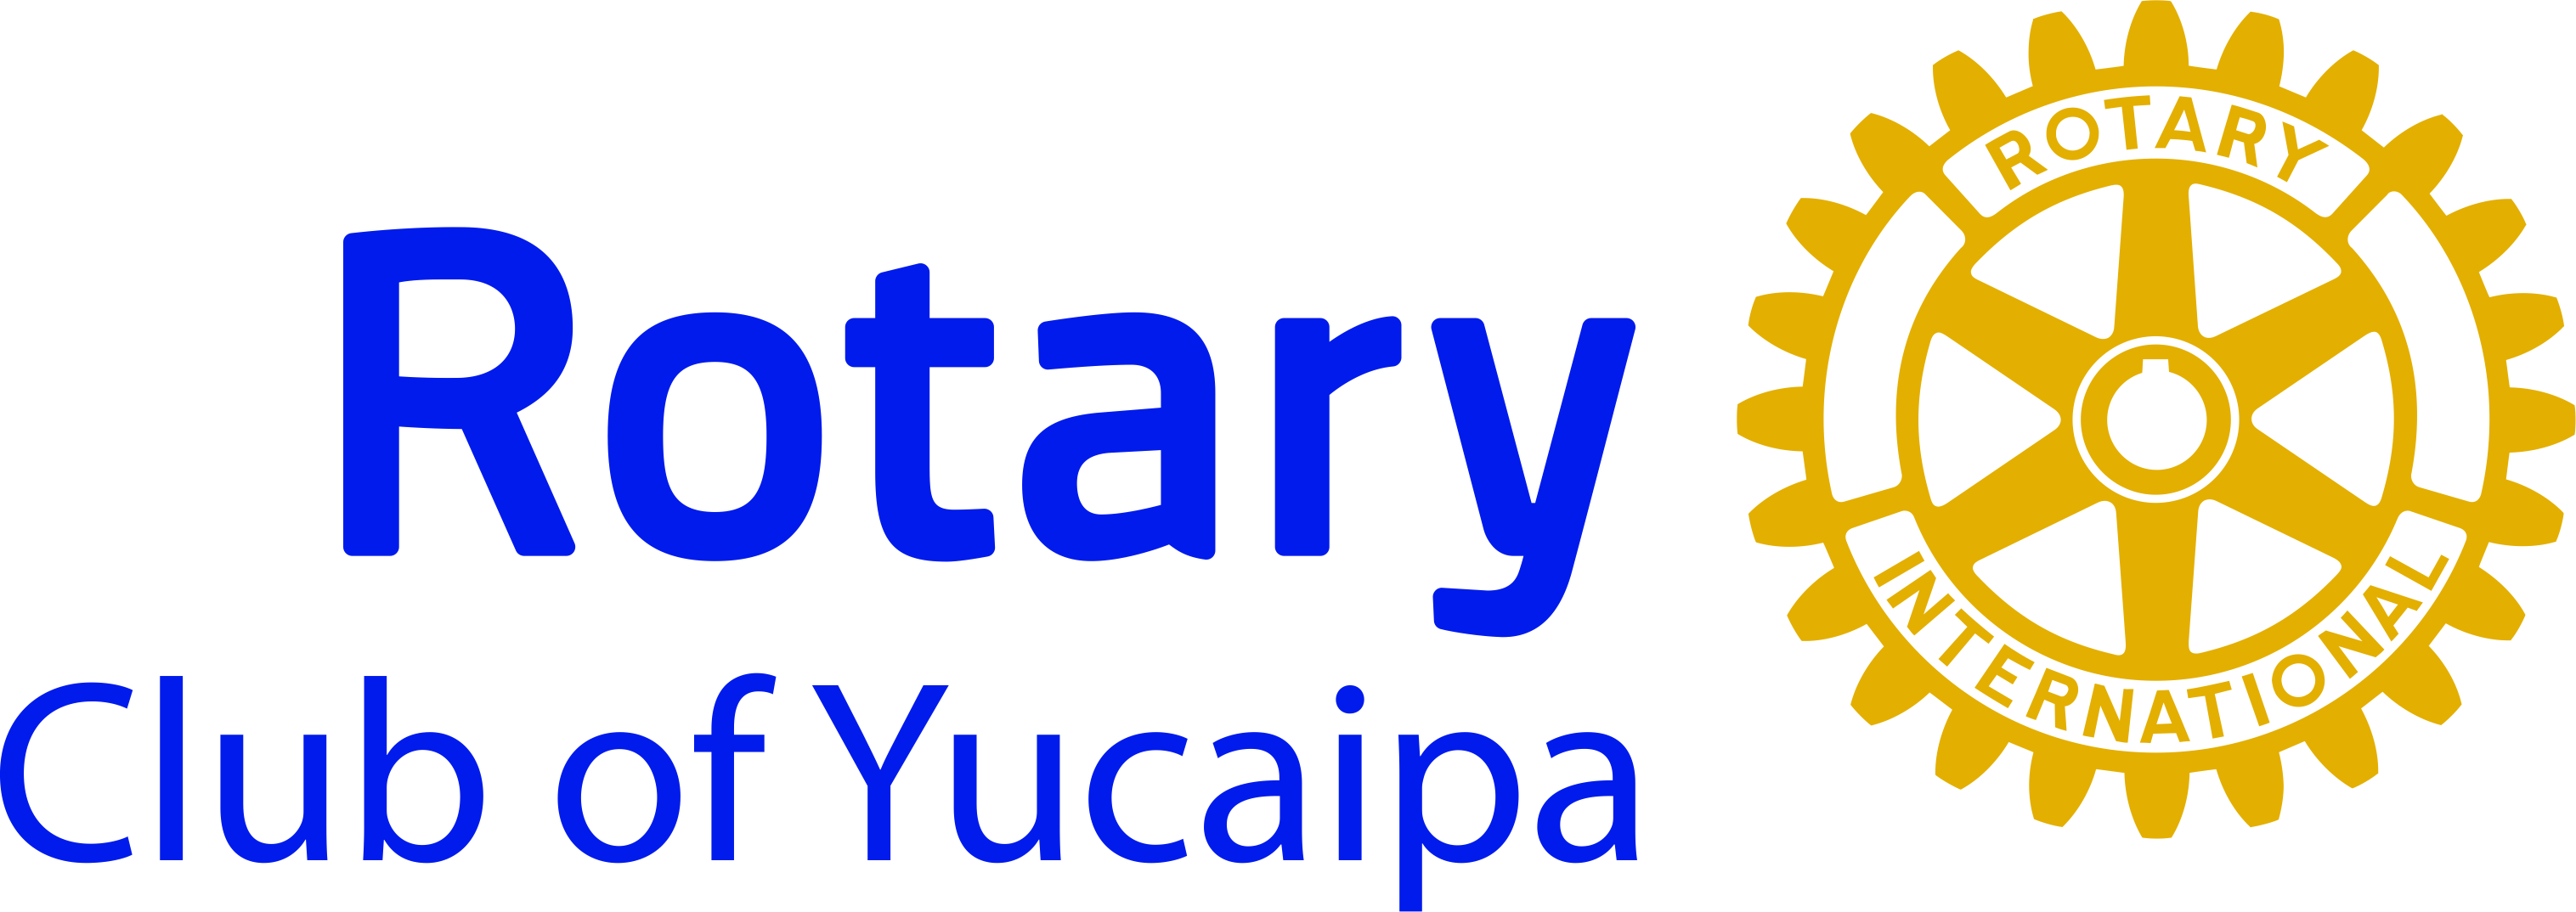 Rotary Club of Yucaipa - Rotary International